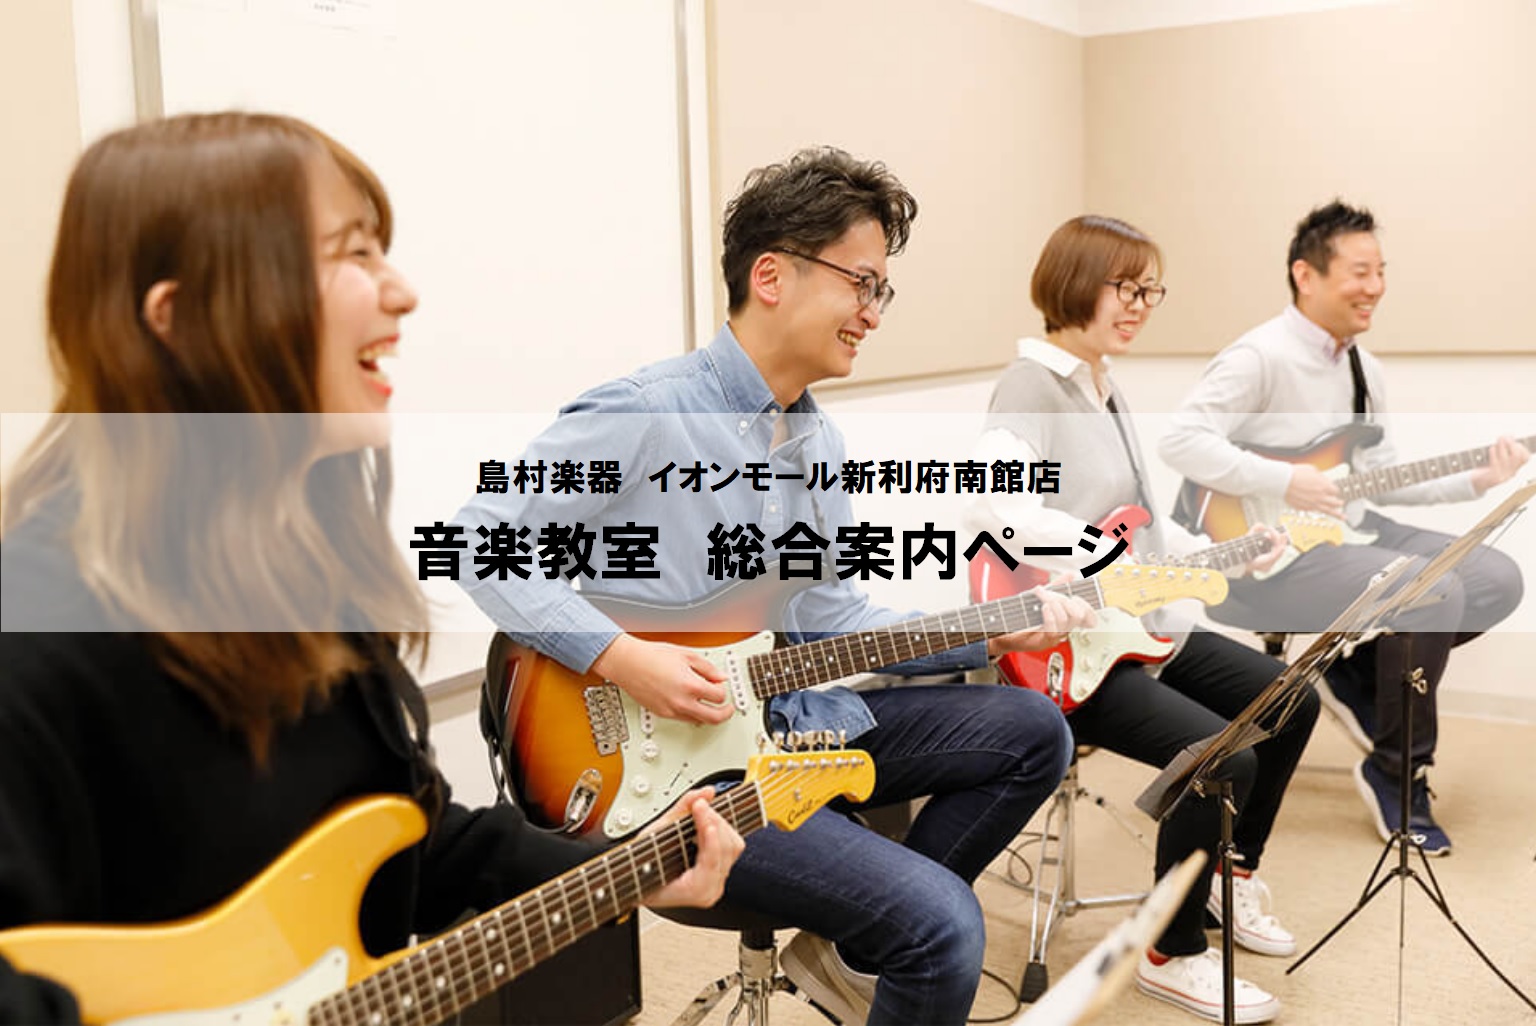 [https://www.shimamura.co.jp/shop/rifu/lesson-info/20200913/5076:title=] *島村楽器の音楽教室 音楽を楽しみたい気持ちをサポートするのが島村楽器の音楽教室。 お一人お一人のご希望をお伺いしながら、レッスン内容をご提案させていただ […]